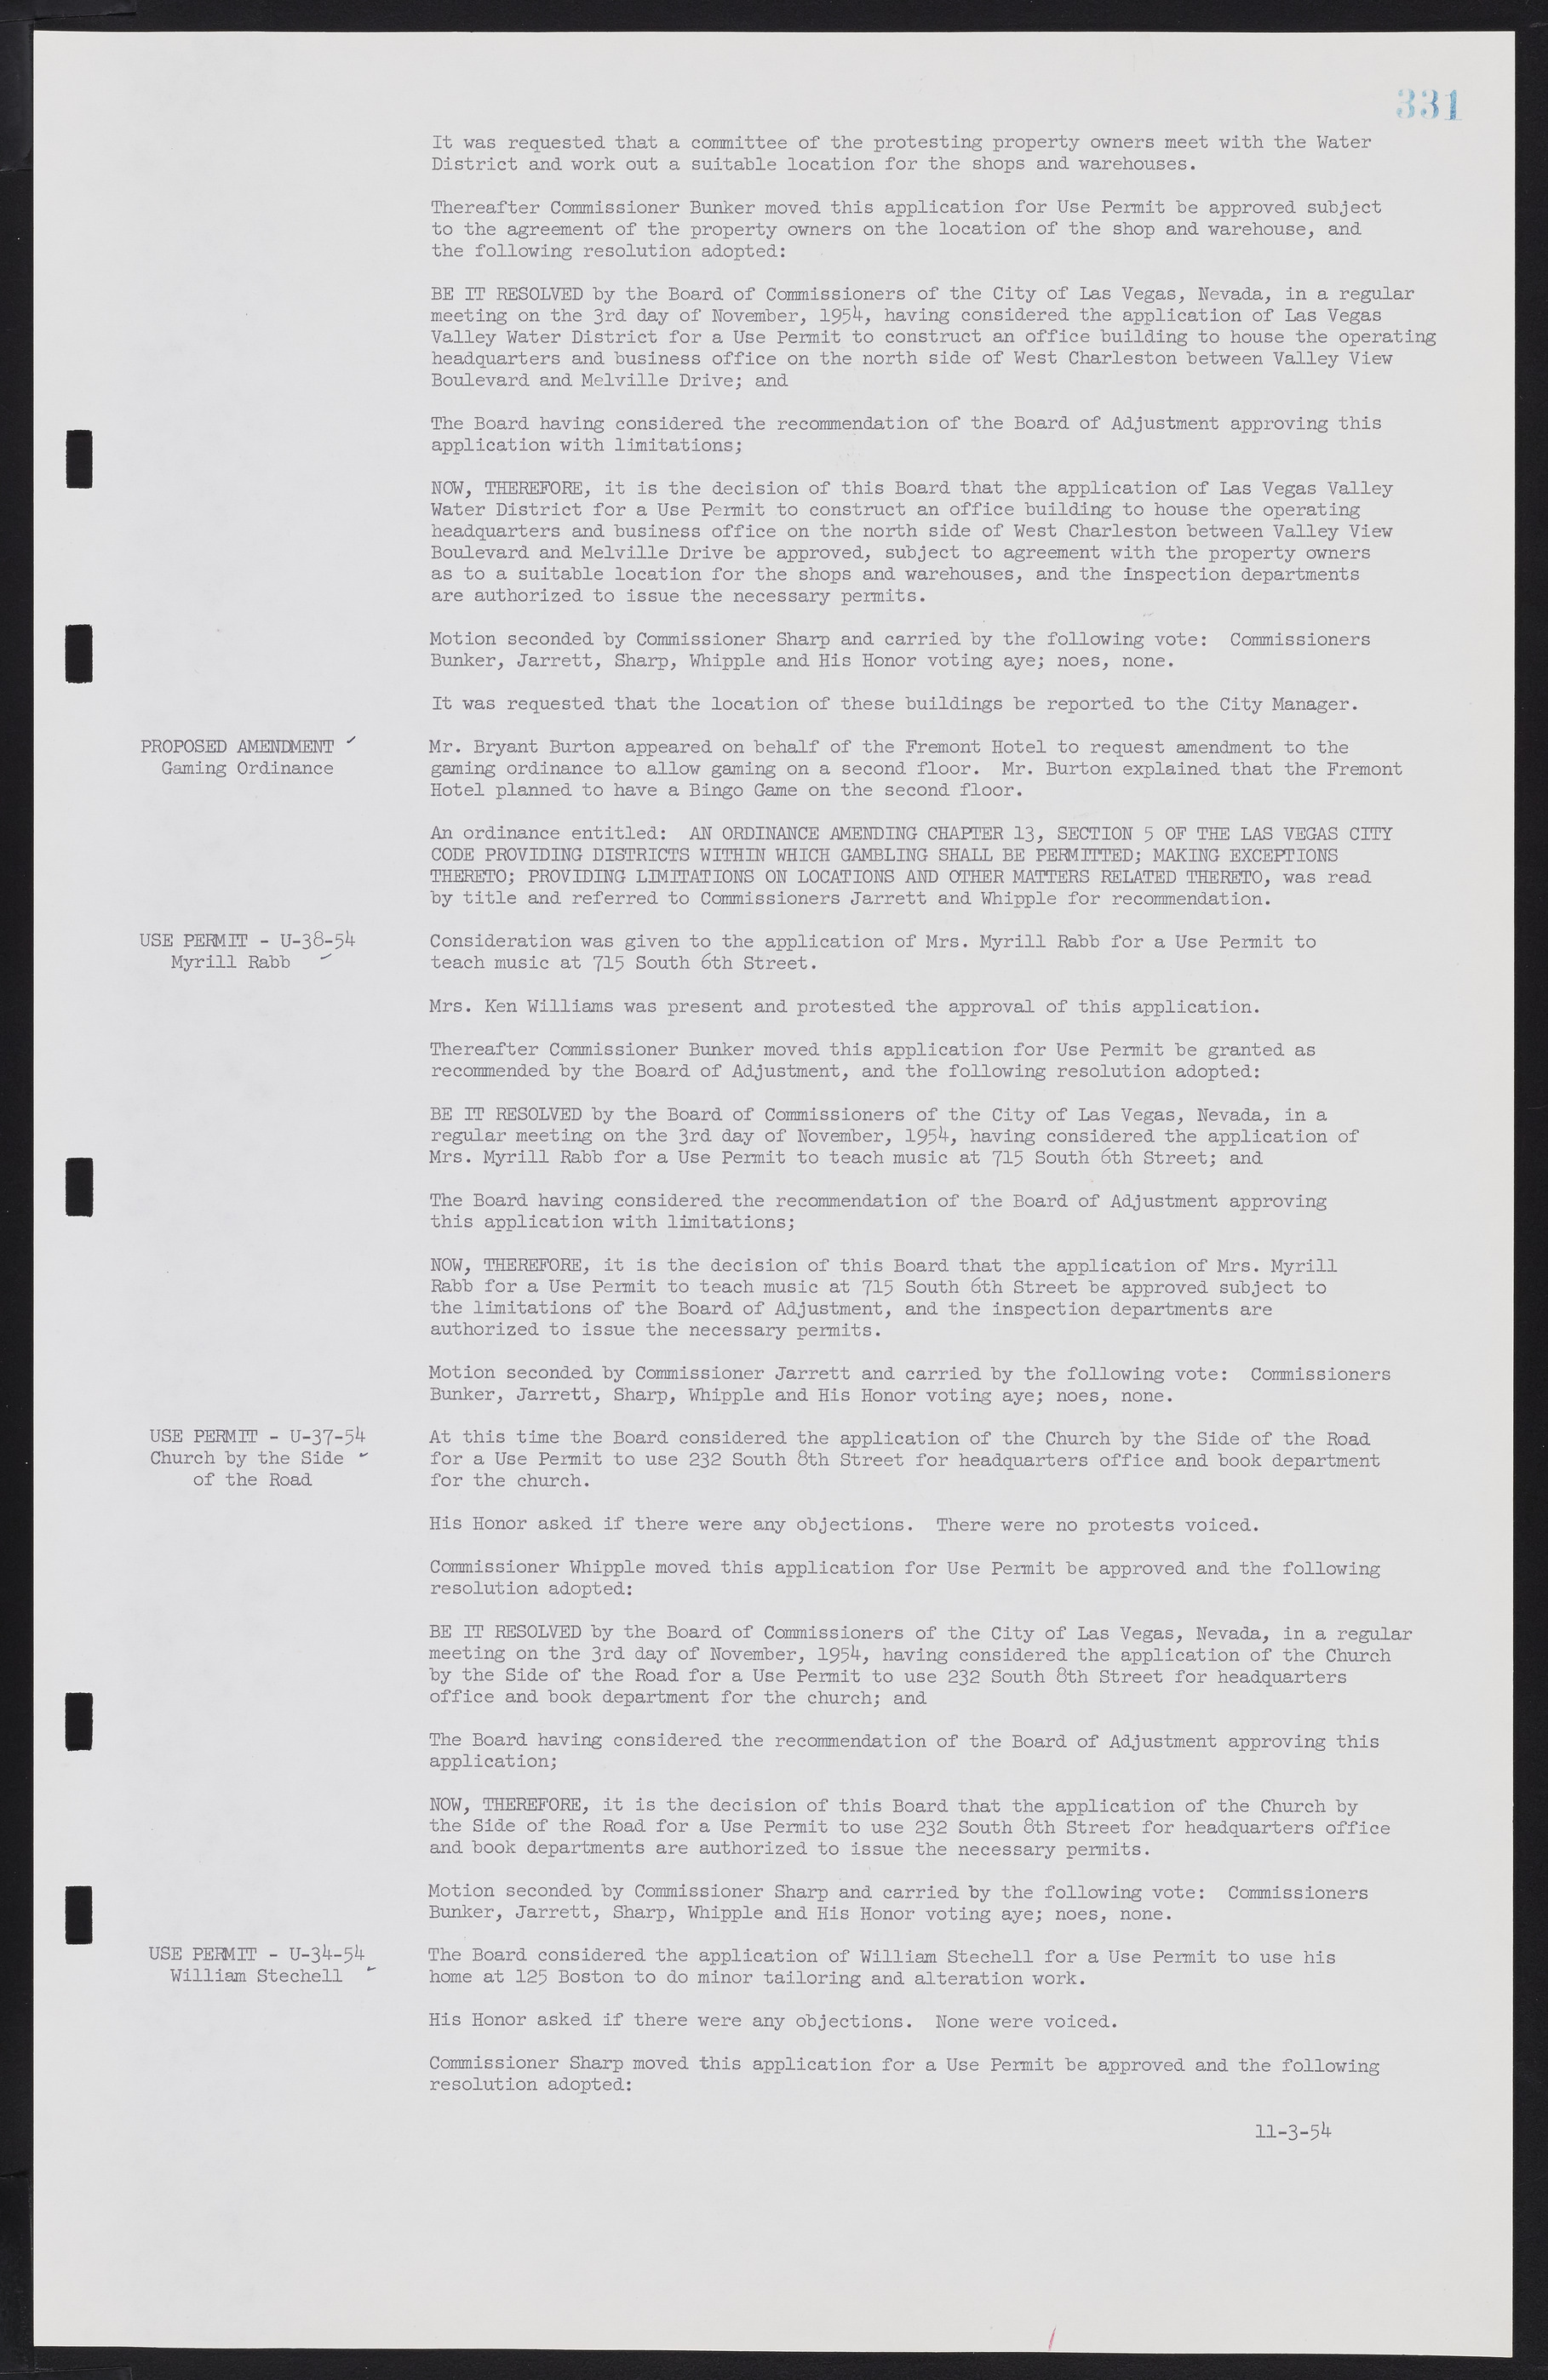 Las Vegas City Commission Minutes, February 17, 1954 to September 21, 1955, lvc000009-337